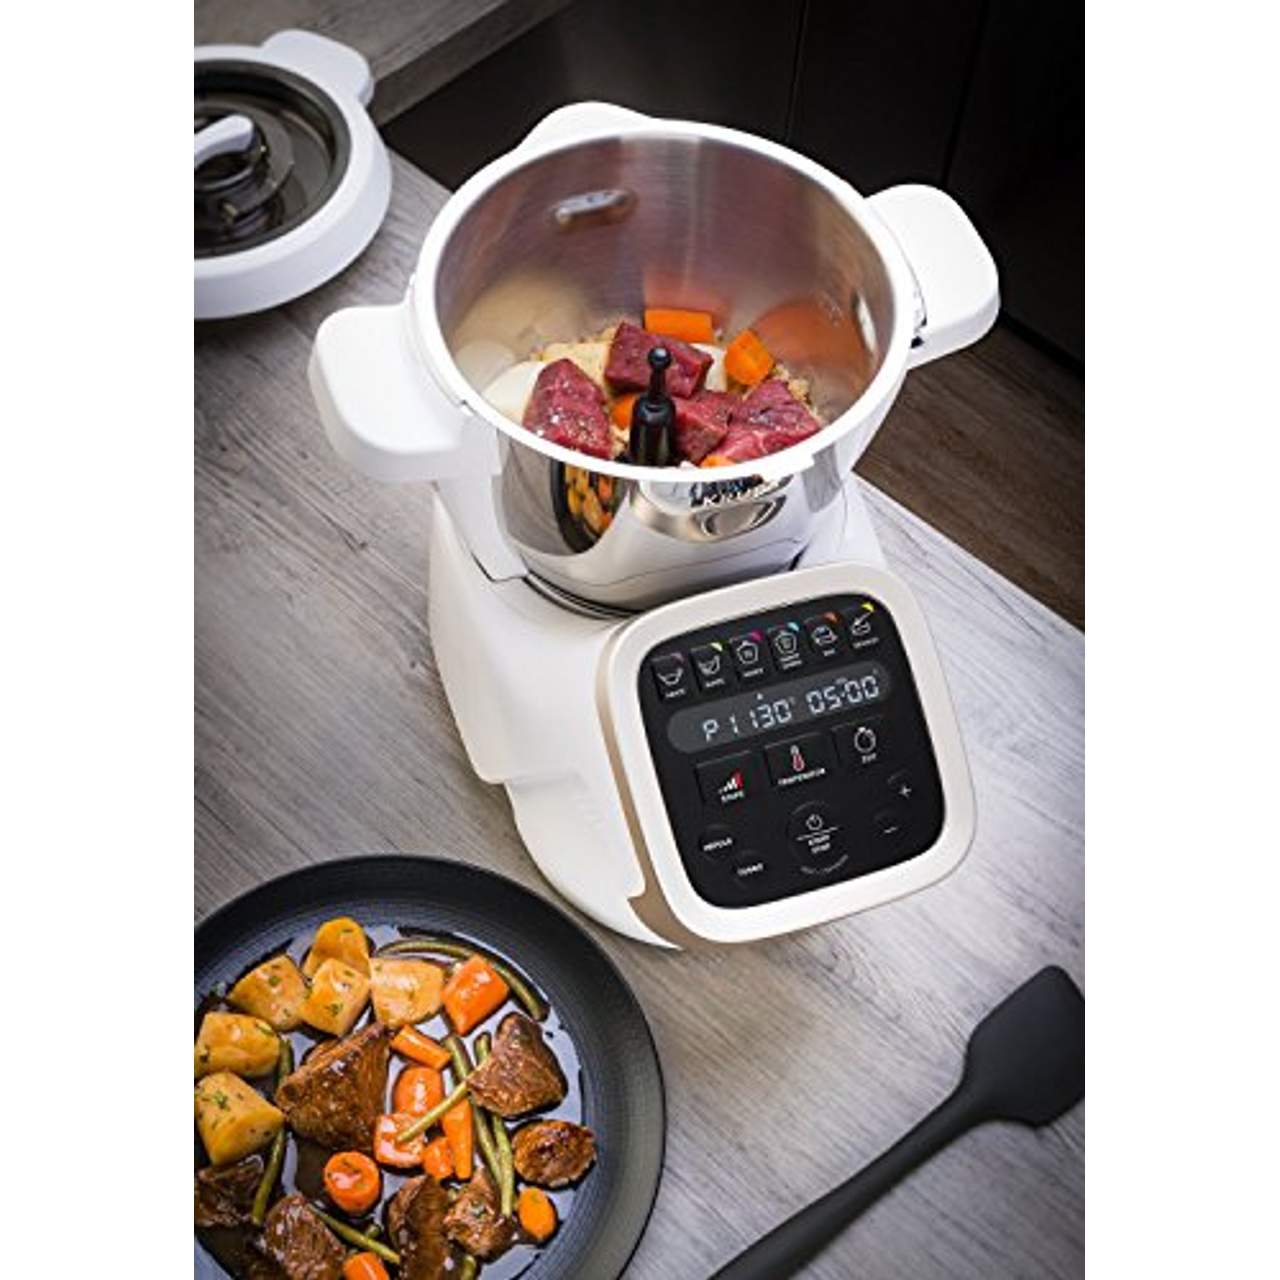 Krups Prep&Cook HP5031 Multifunktions-Küchenmaschine